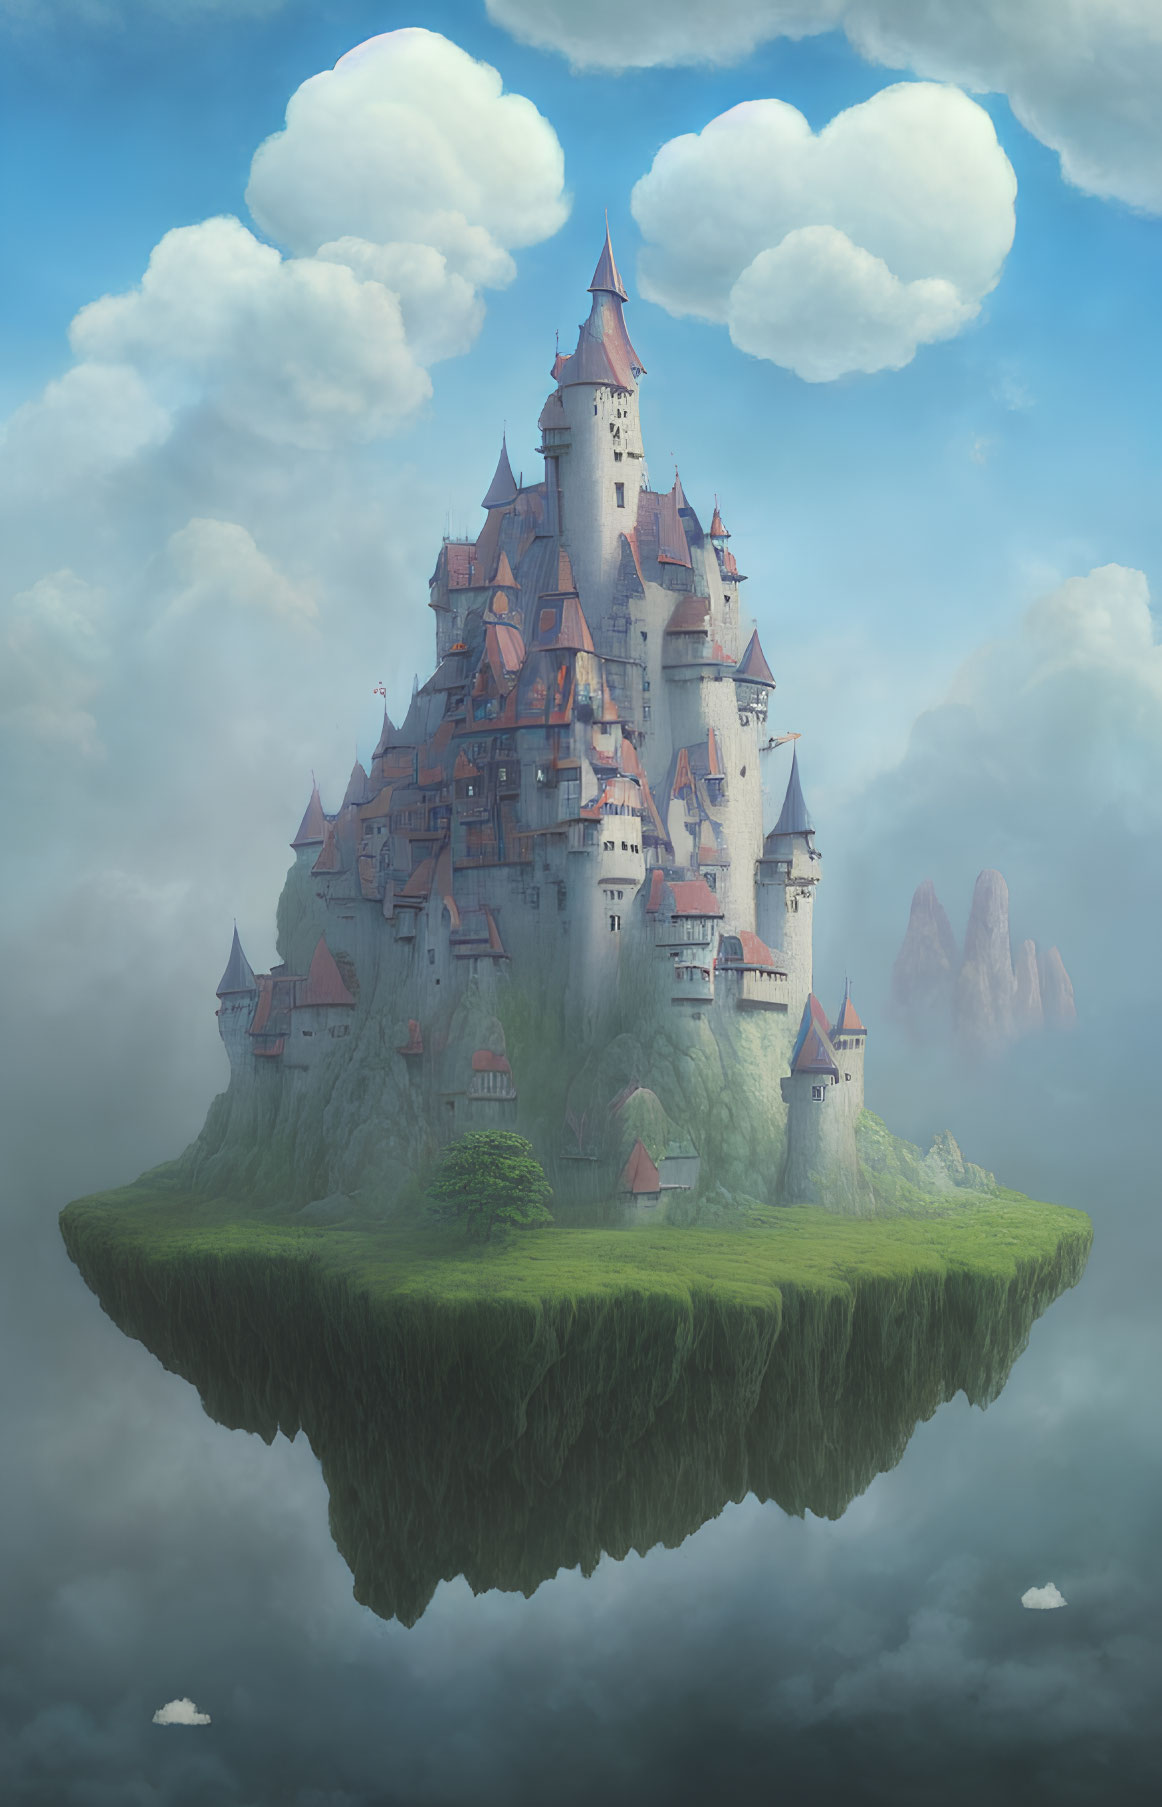 Majestic castle on floating island in clear blue sky